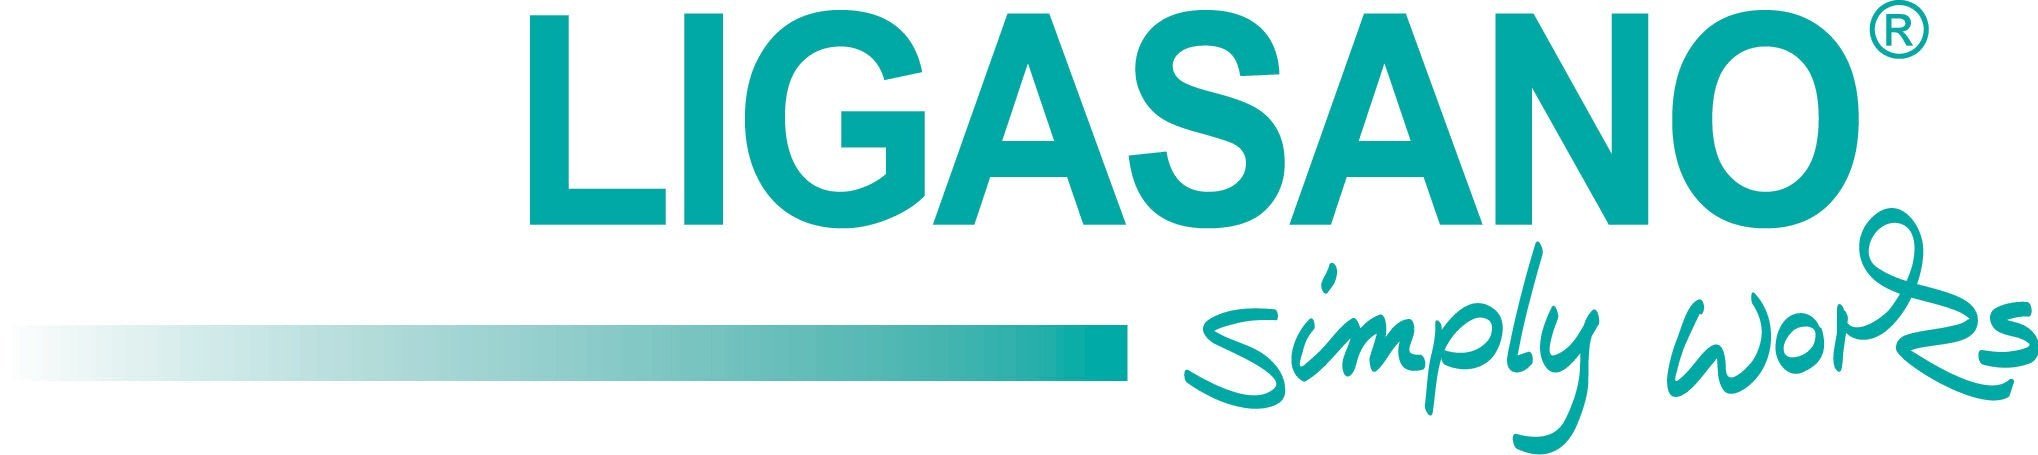 LIGASANO+Logo+Englisch+Euroskala.jpg